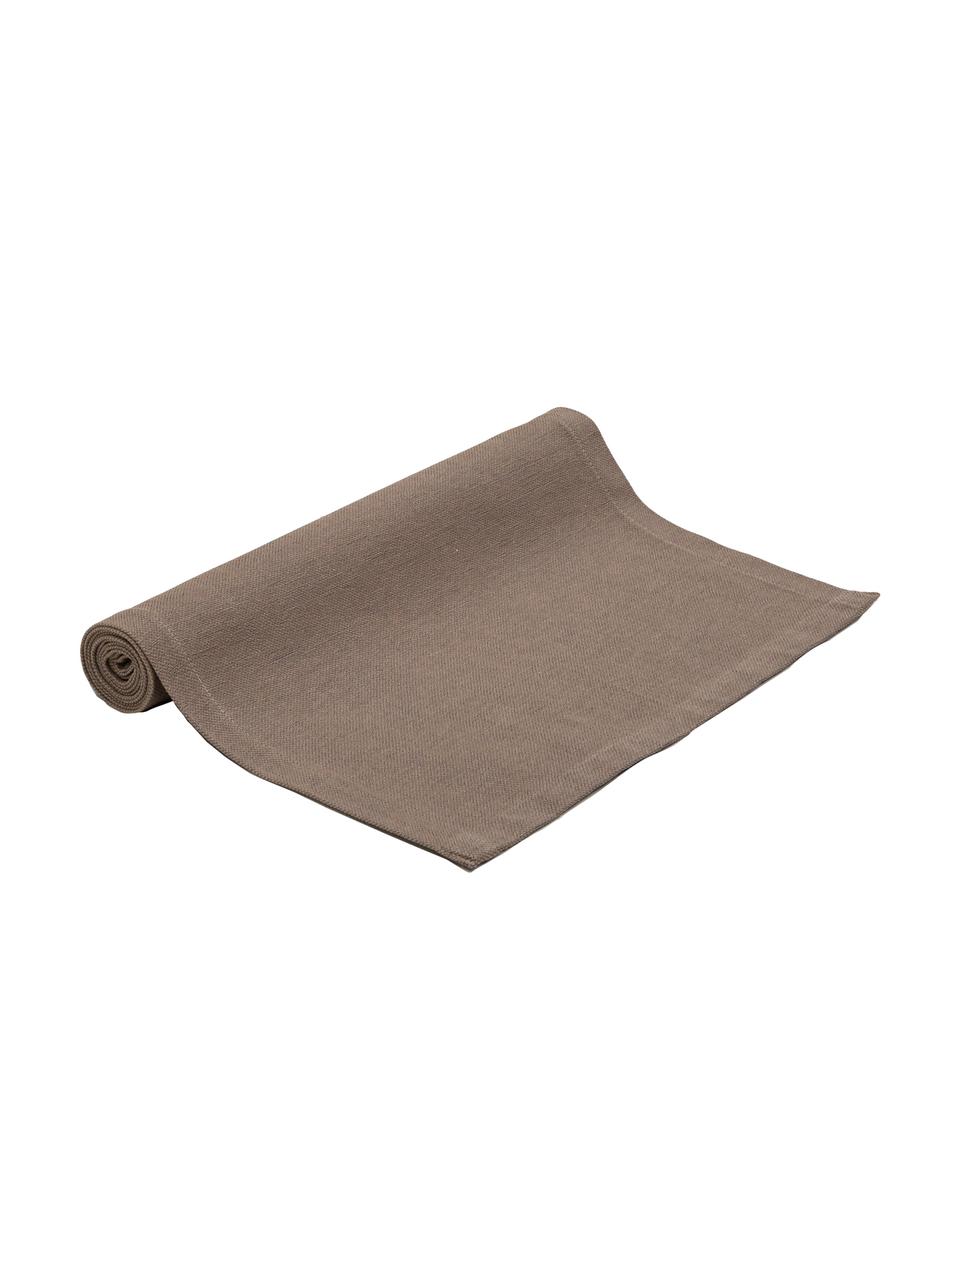 Chemin de table brun Riva, 55 % coton, 45 % polyester, Brun, larg. 40 x long. 150 cm